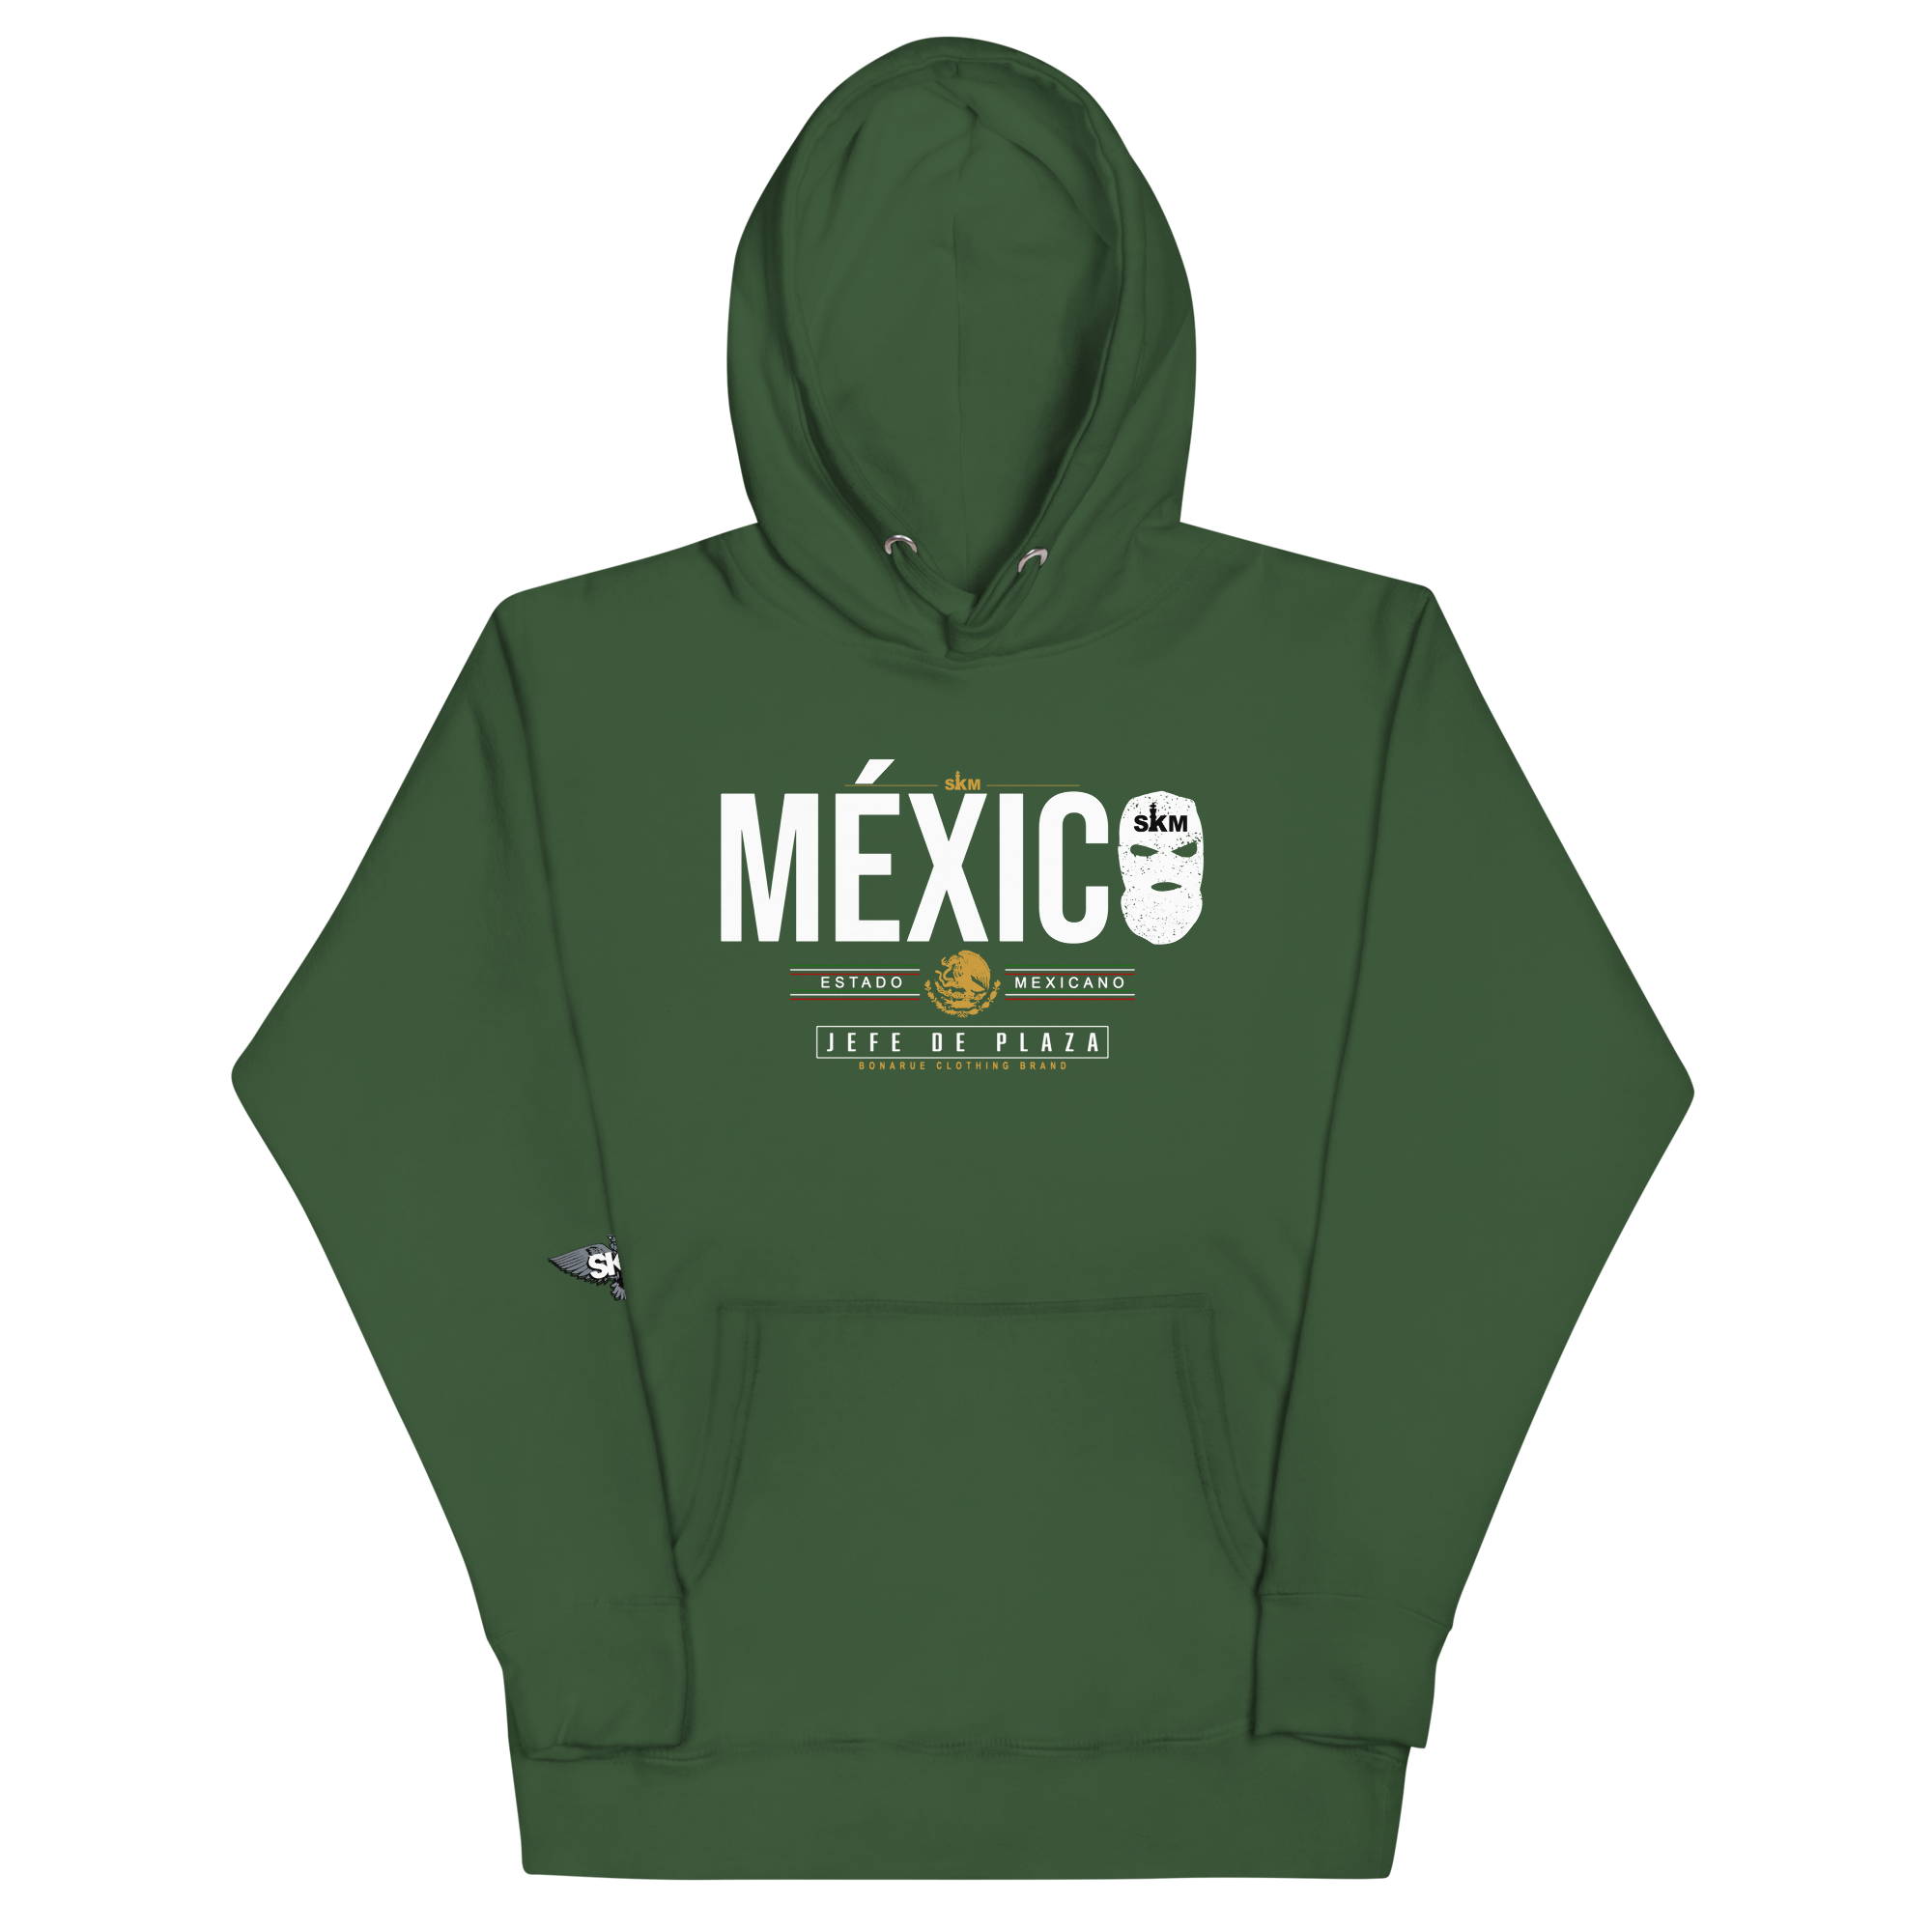 Mexico: Jefe De Plaza Premium Hoodie